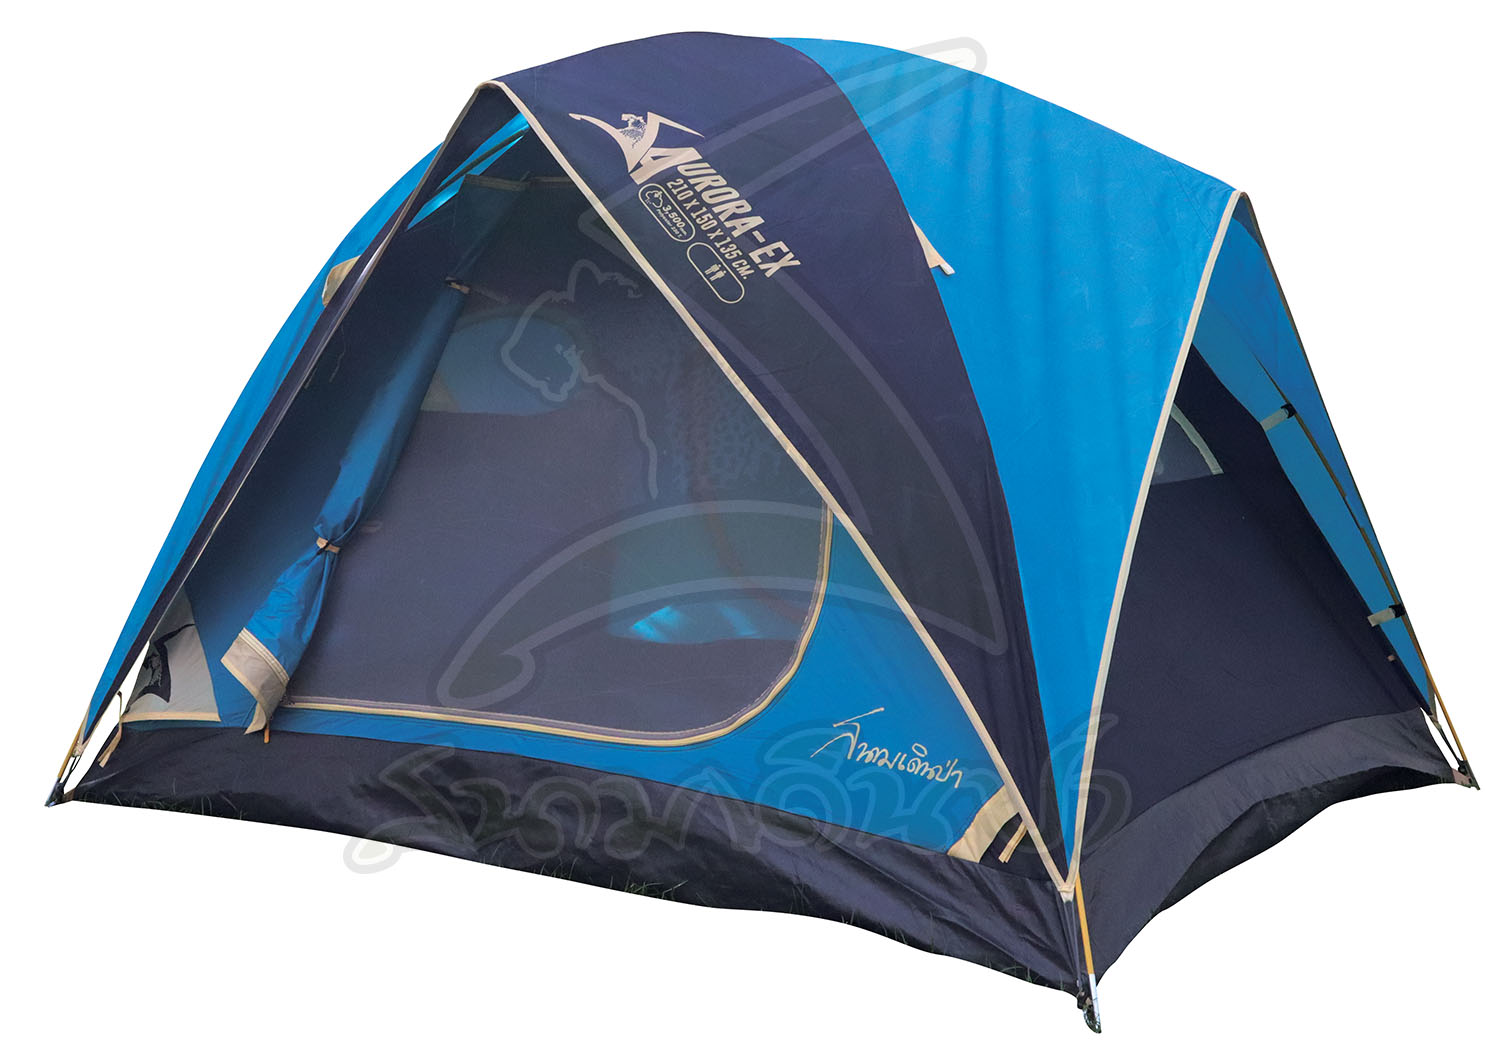 Field and Camping สนามเดินป่า เต็นท์ Aurora EX  ขนาด 210x150x135 ซม. สีน้ำเงิน-กรม